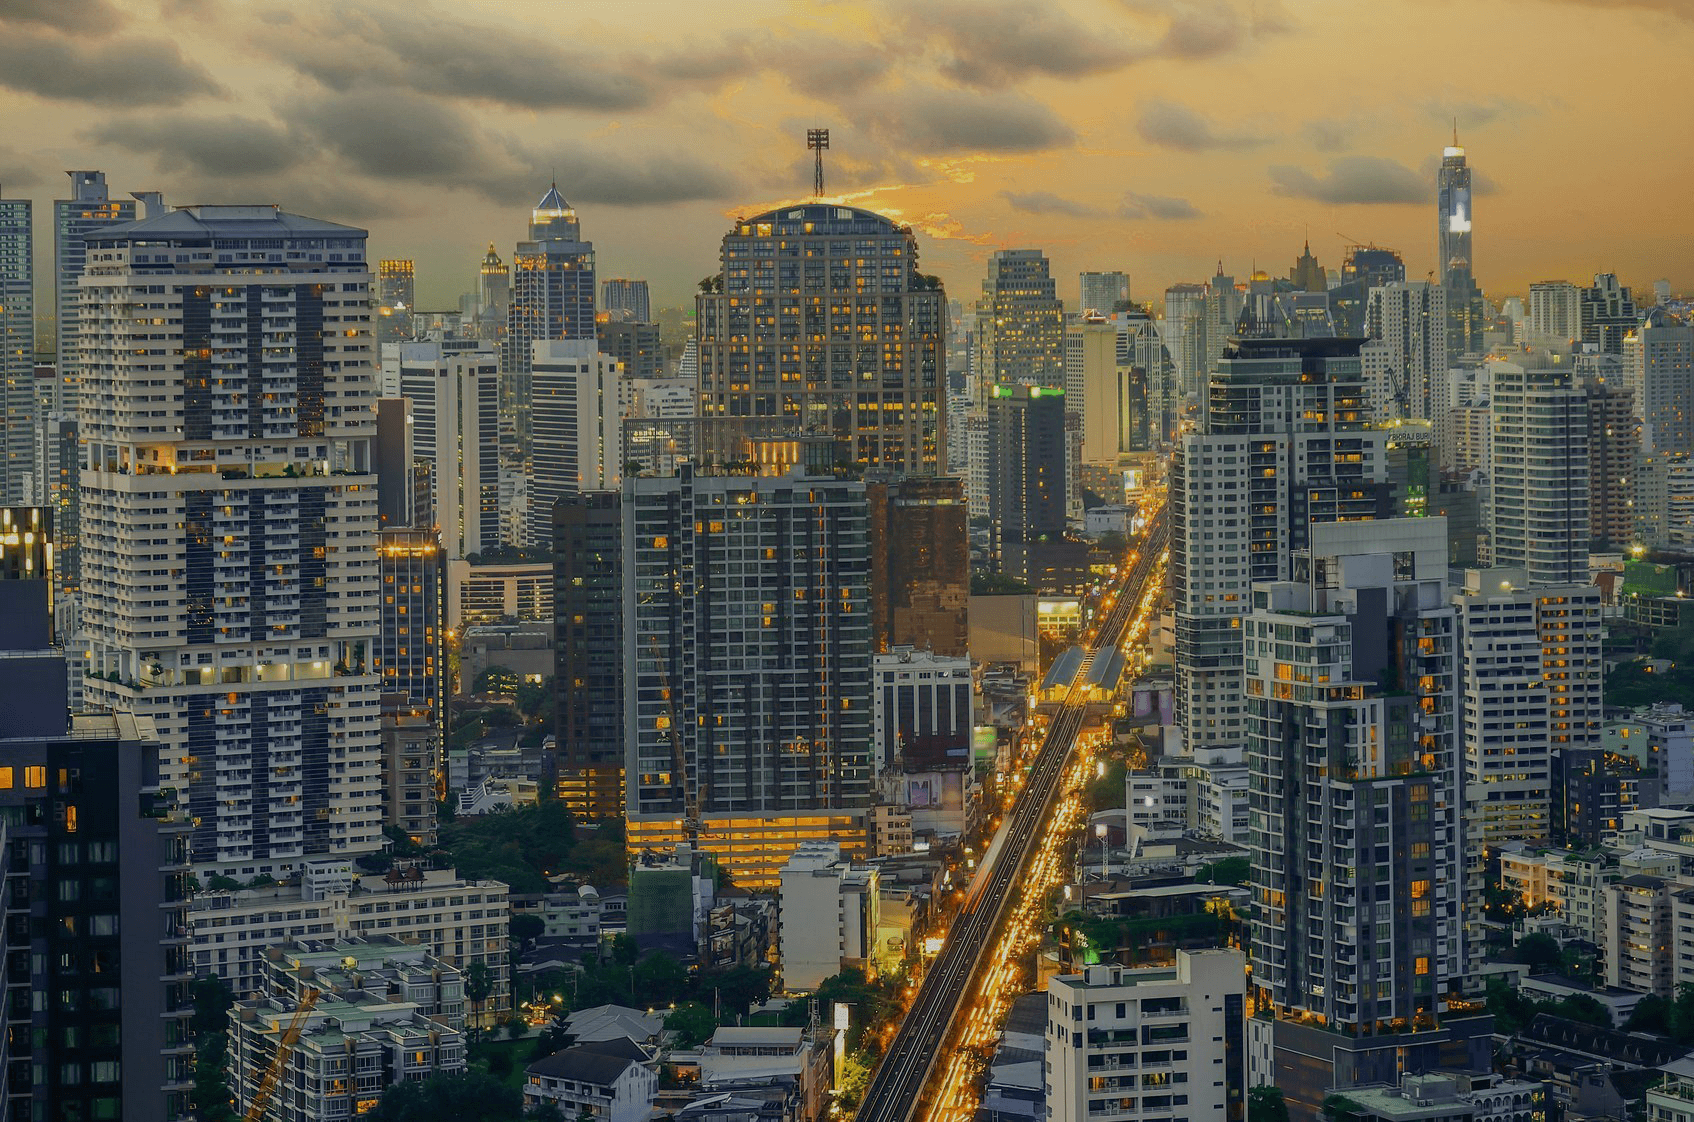 View of the Bangkok skyline at dusk